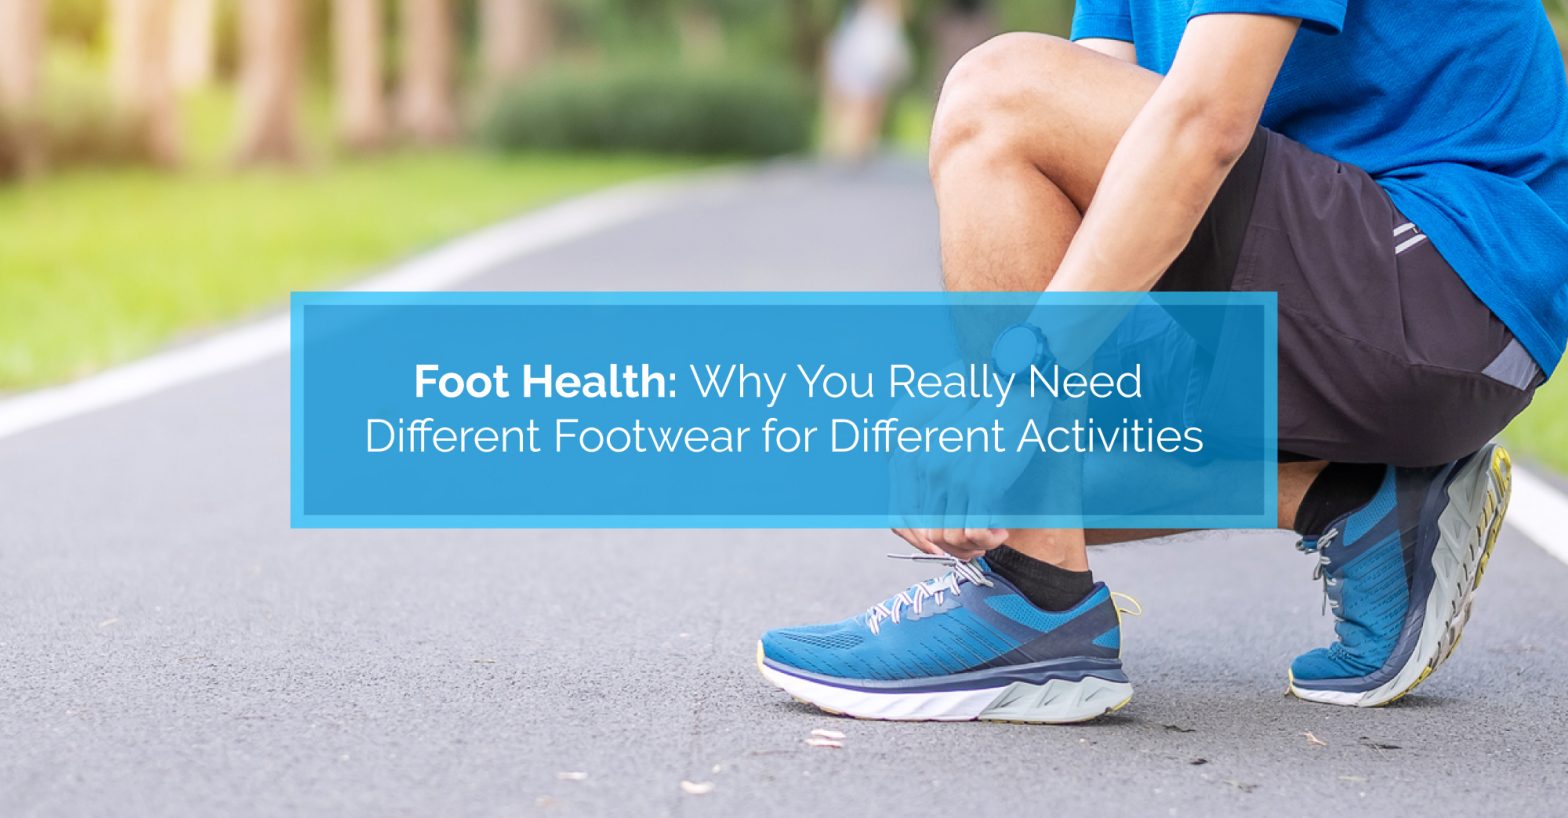 Proper Foot Health Means Proper Footwear